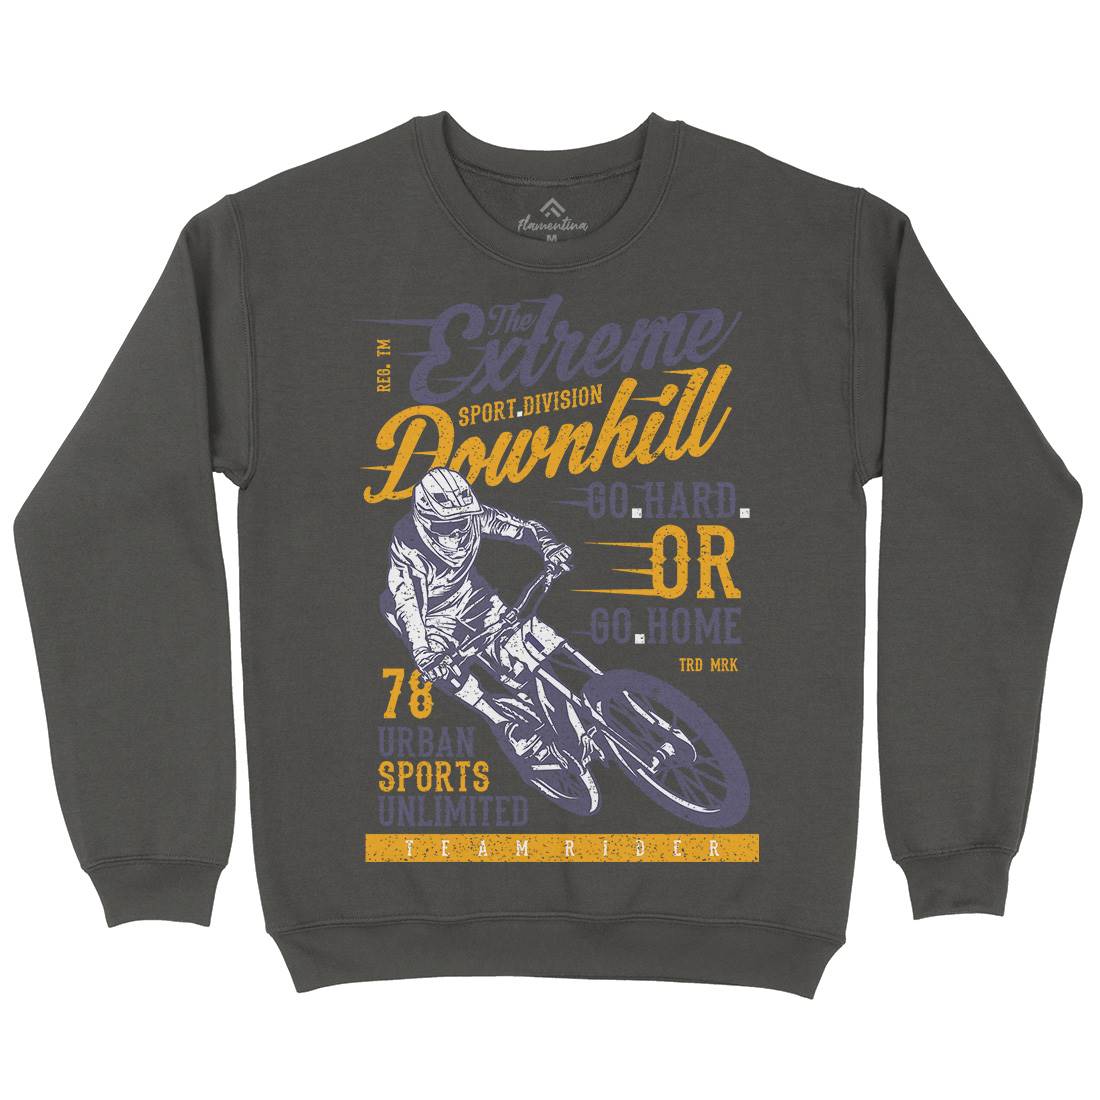 Extreme Downhill Kids Crew Neck Sweatshirt Bikes A772